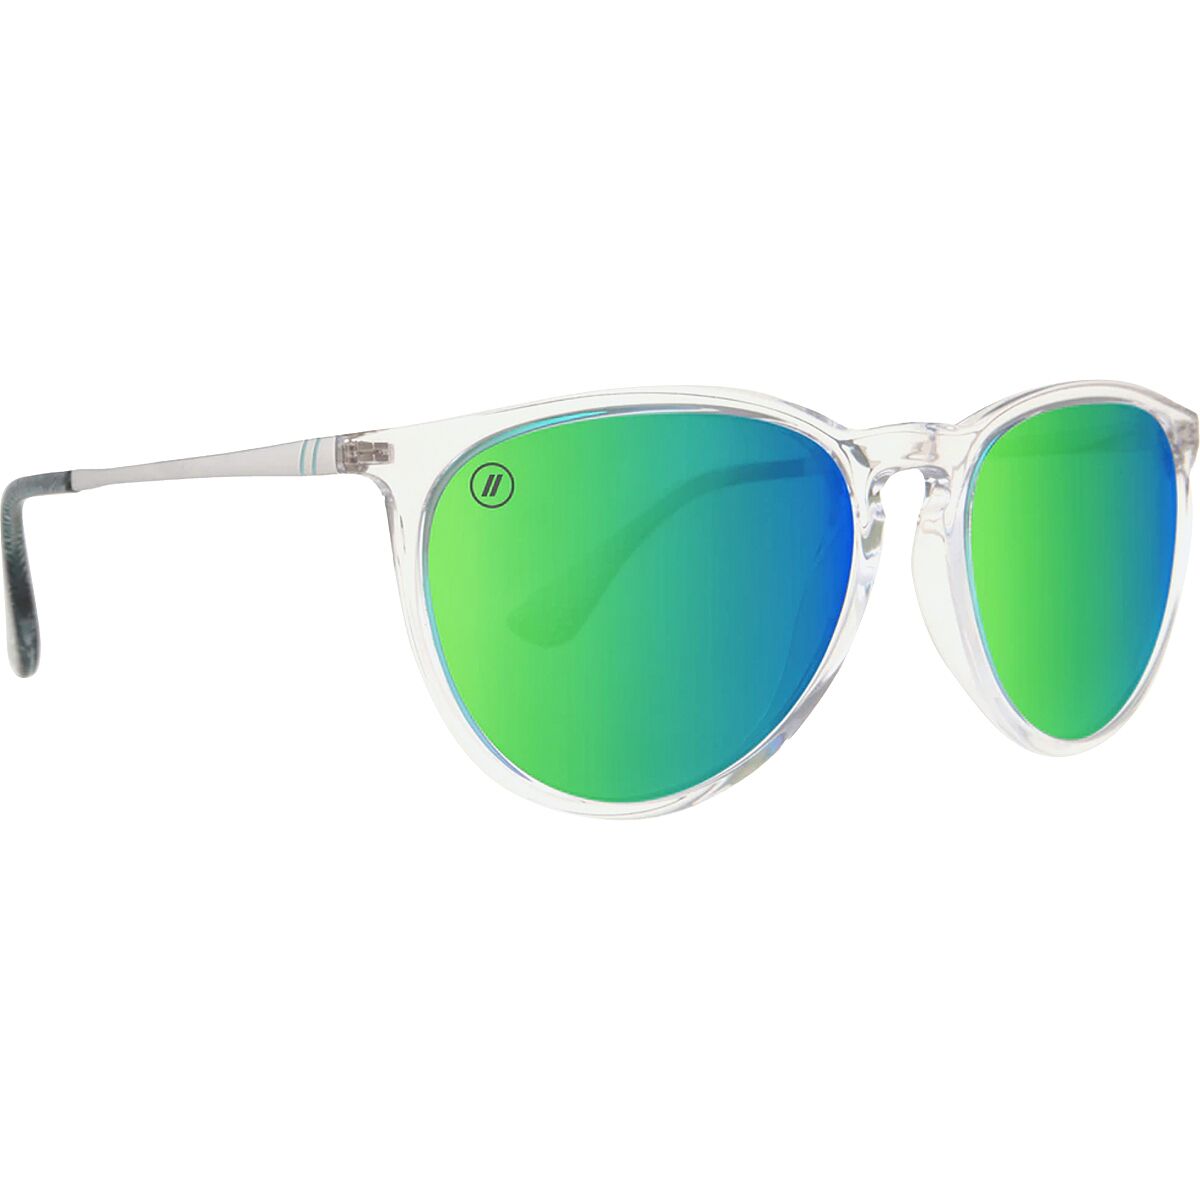 Blenders Eyewear G Magic North Park Polarized Sunglasses - Women's